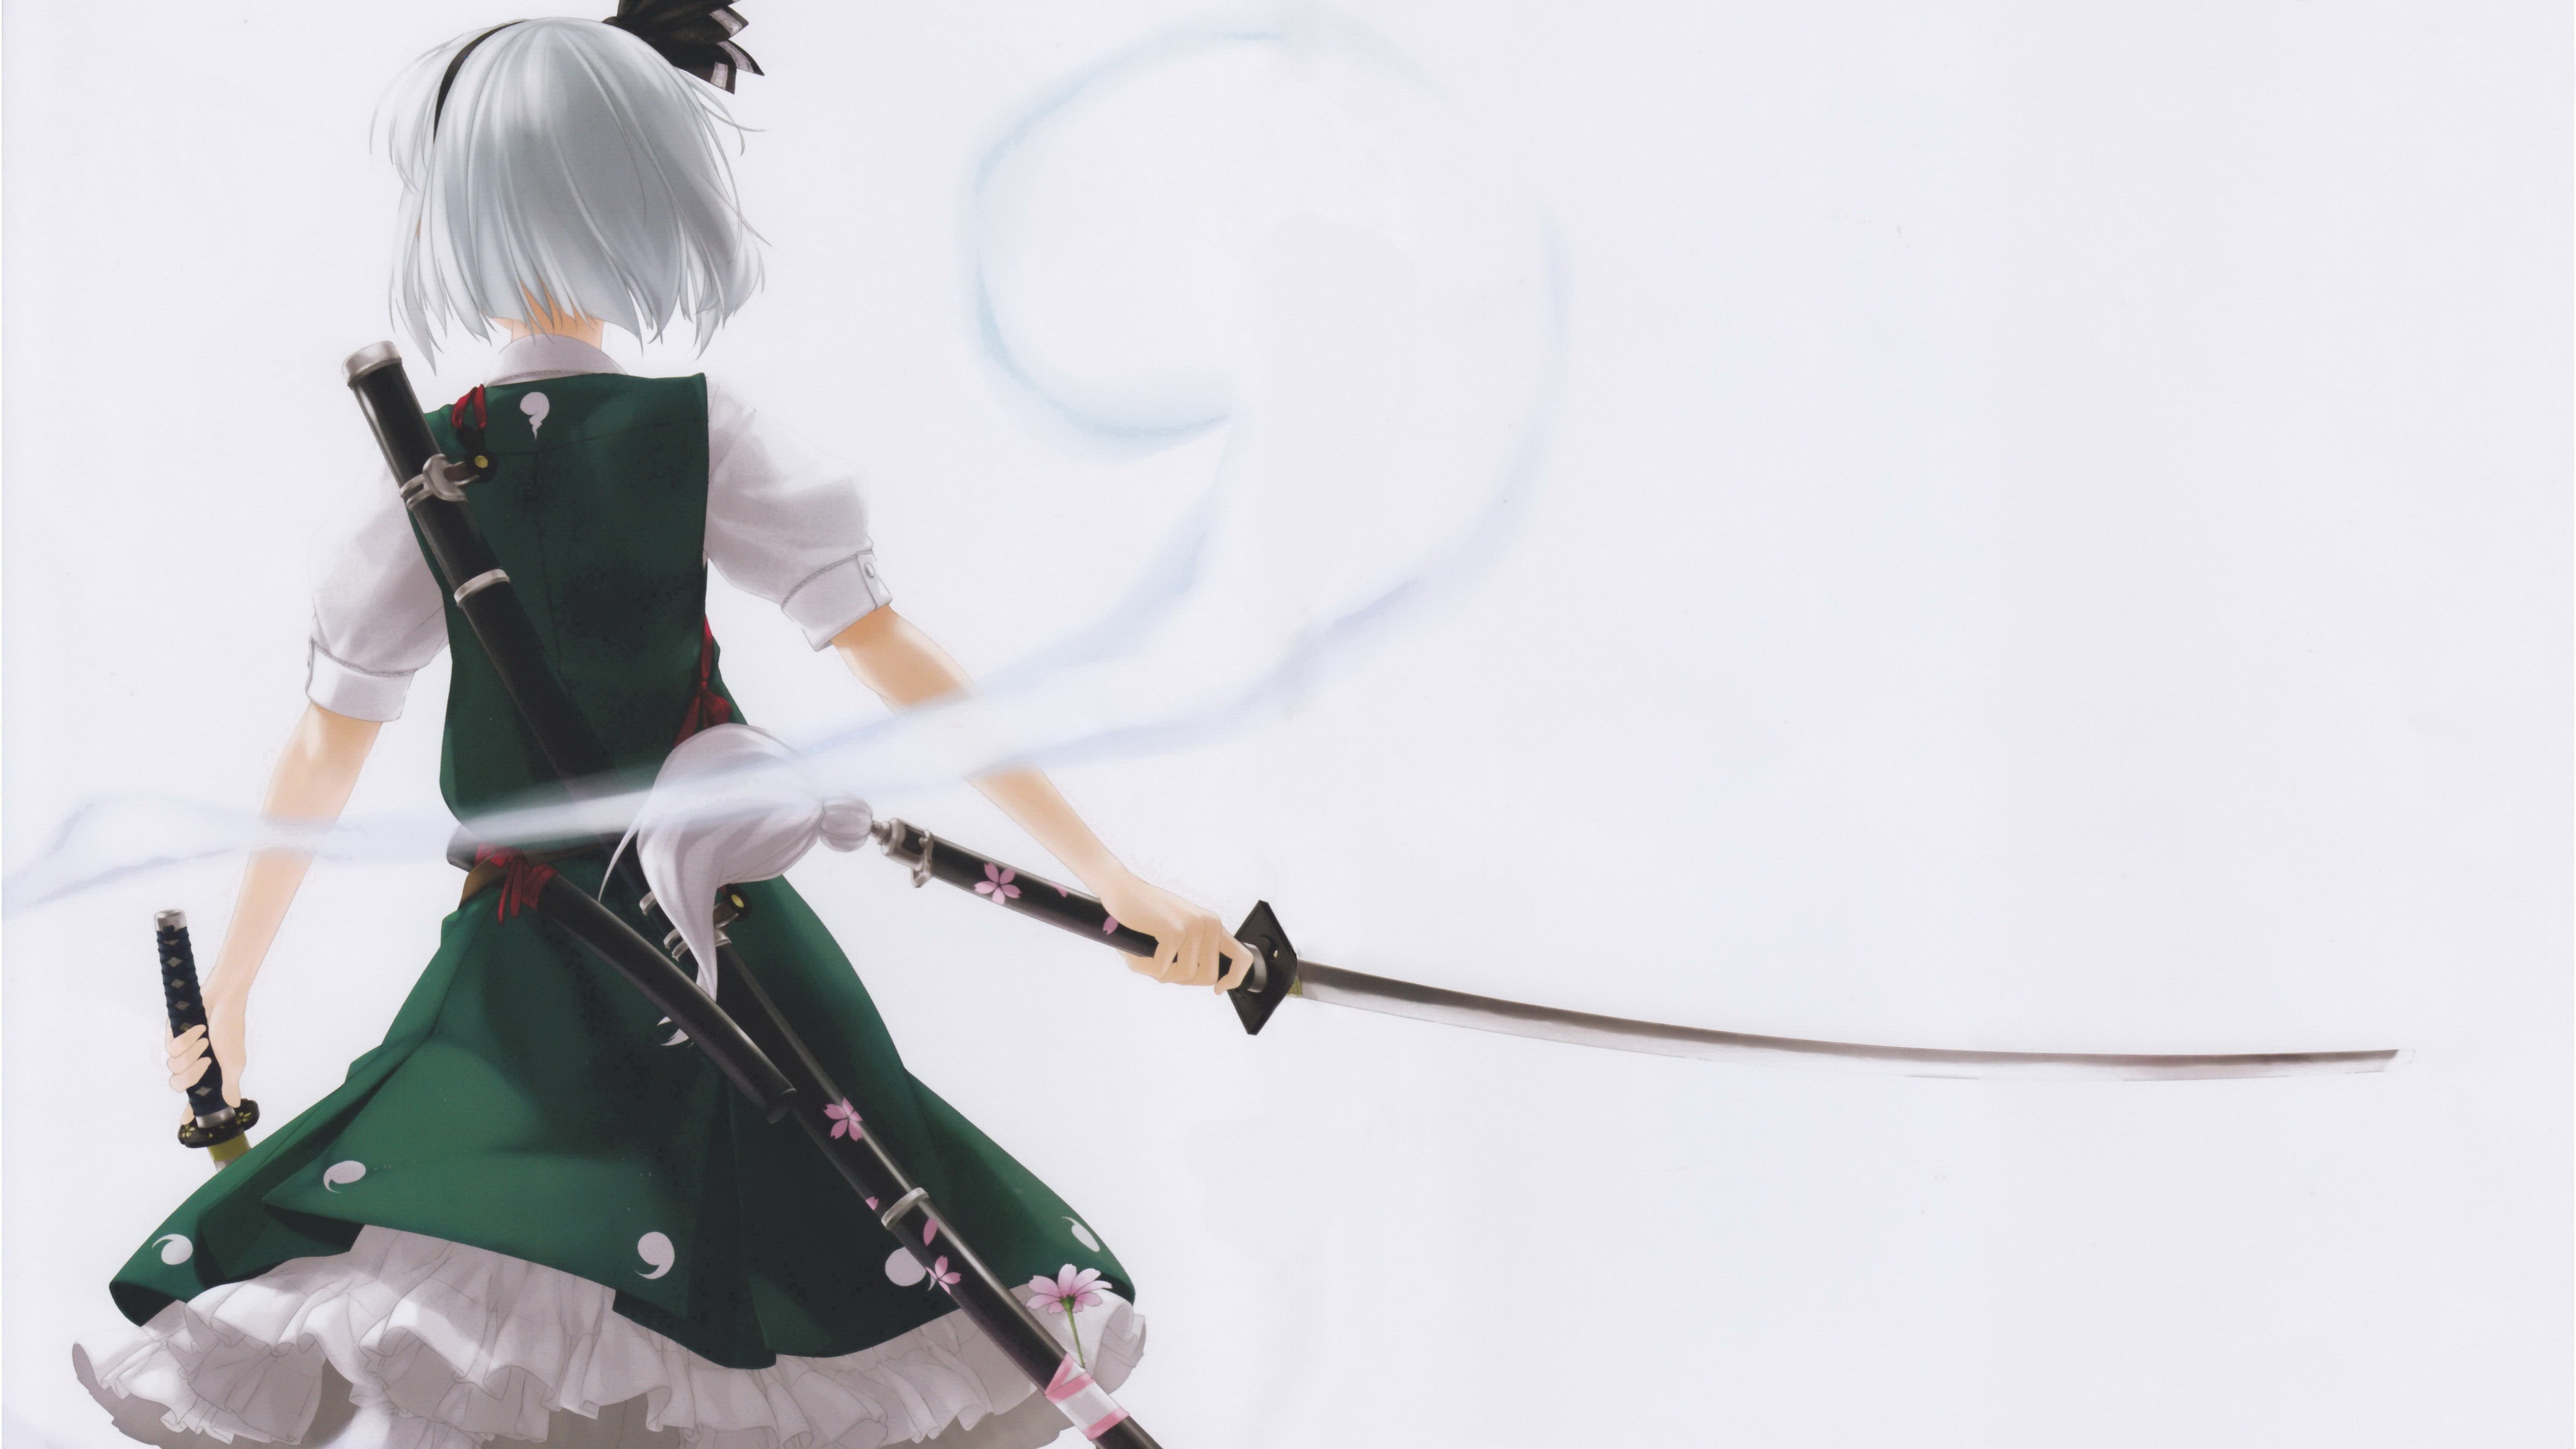 Anime 4000x2250 anime Touhou Konpaku Youmu sword anime girls weapon back women with swords dress green dress fantasy art fantasy girl